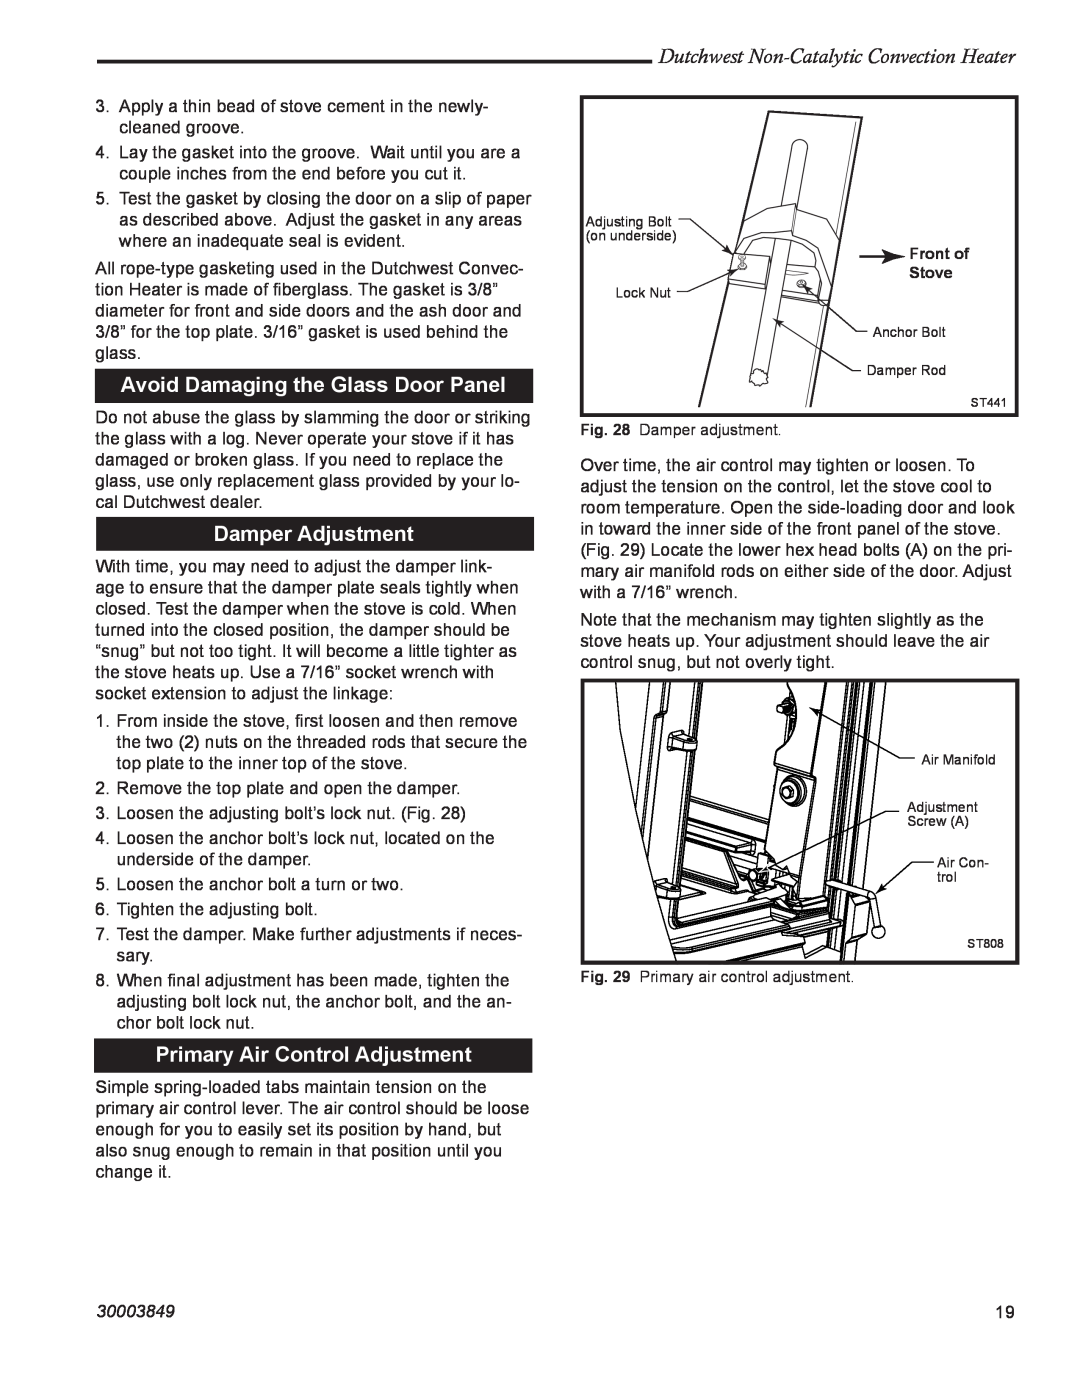 Vermont Casting 2477CE Avoid Damaging the Glass Door Panel, Damper Adjustment, Primary Air Control Adjustment, 30003849 